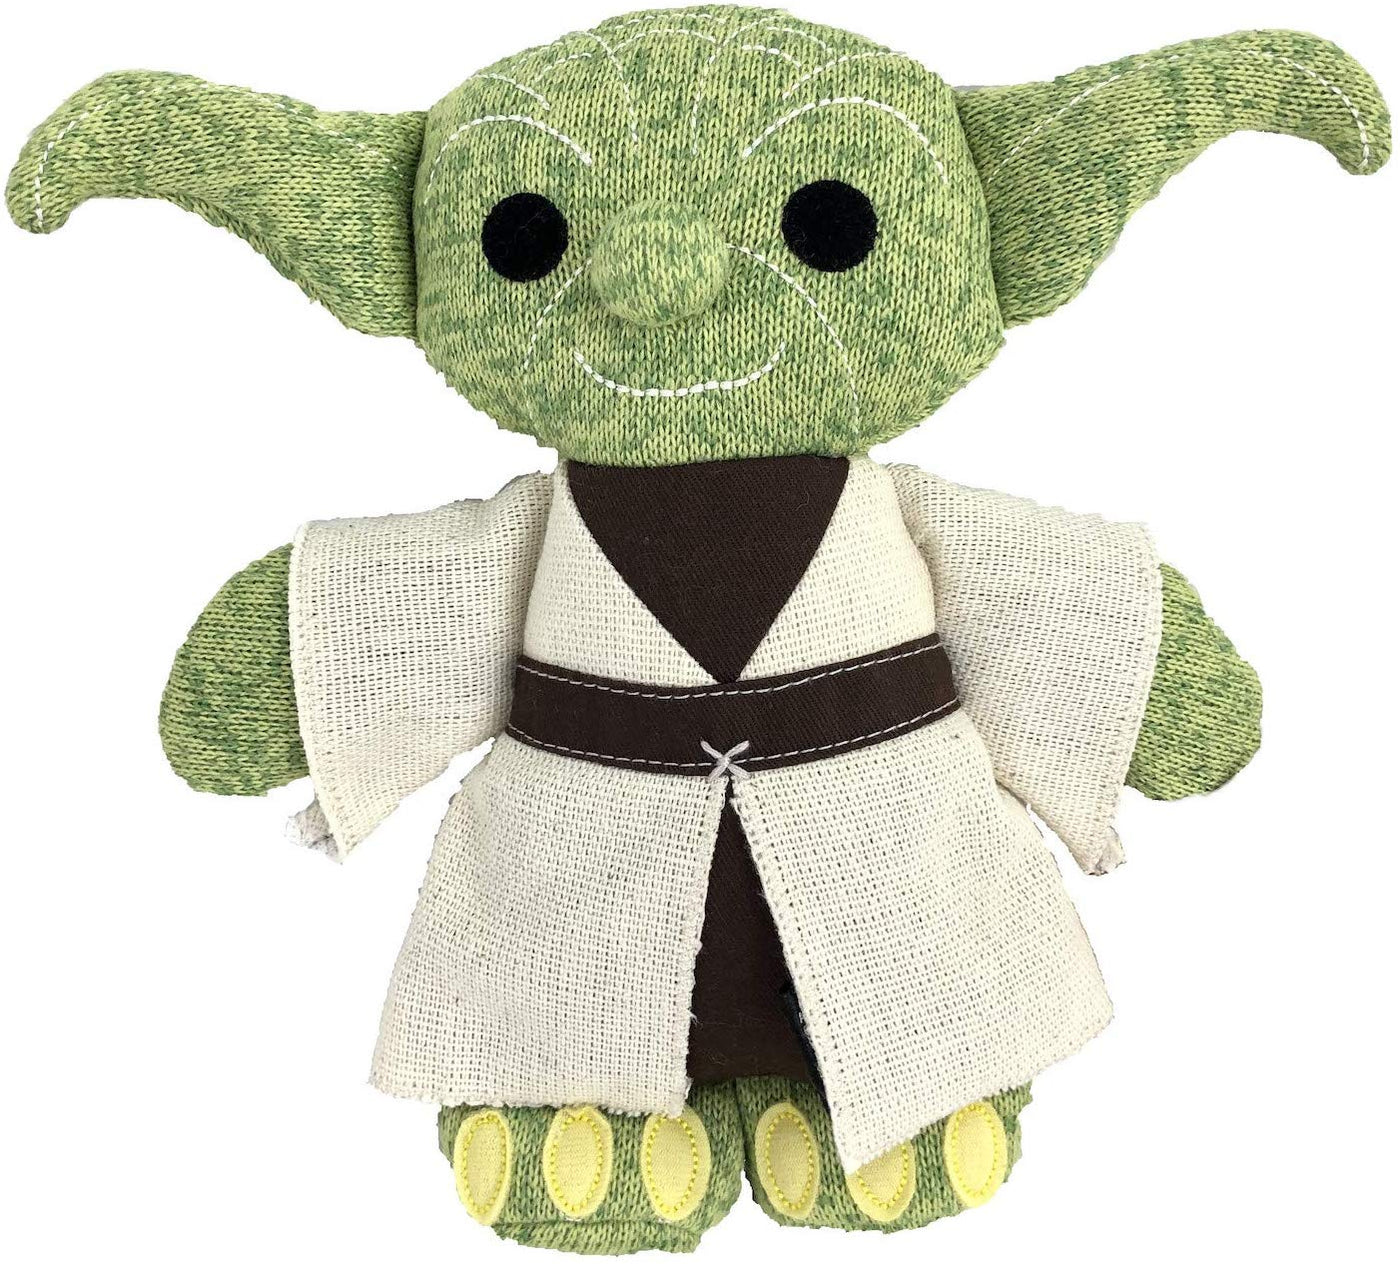 Disney Parks Star Wars Galaxy's Edge Yoda Plush New with Tag